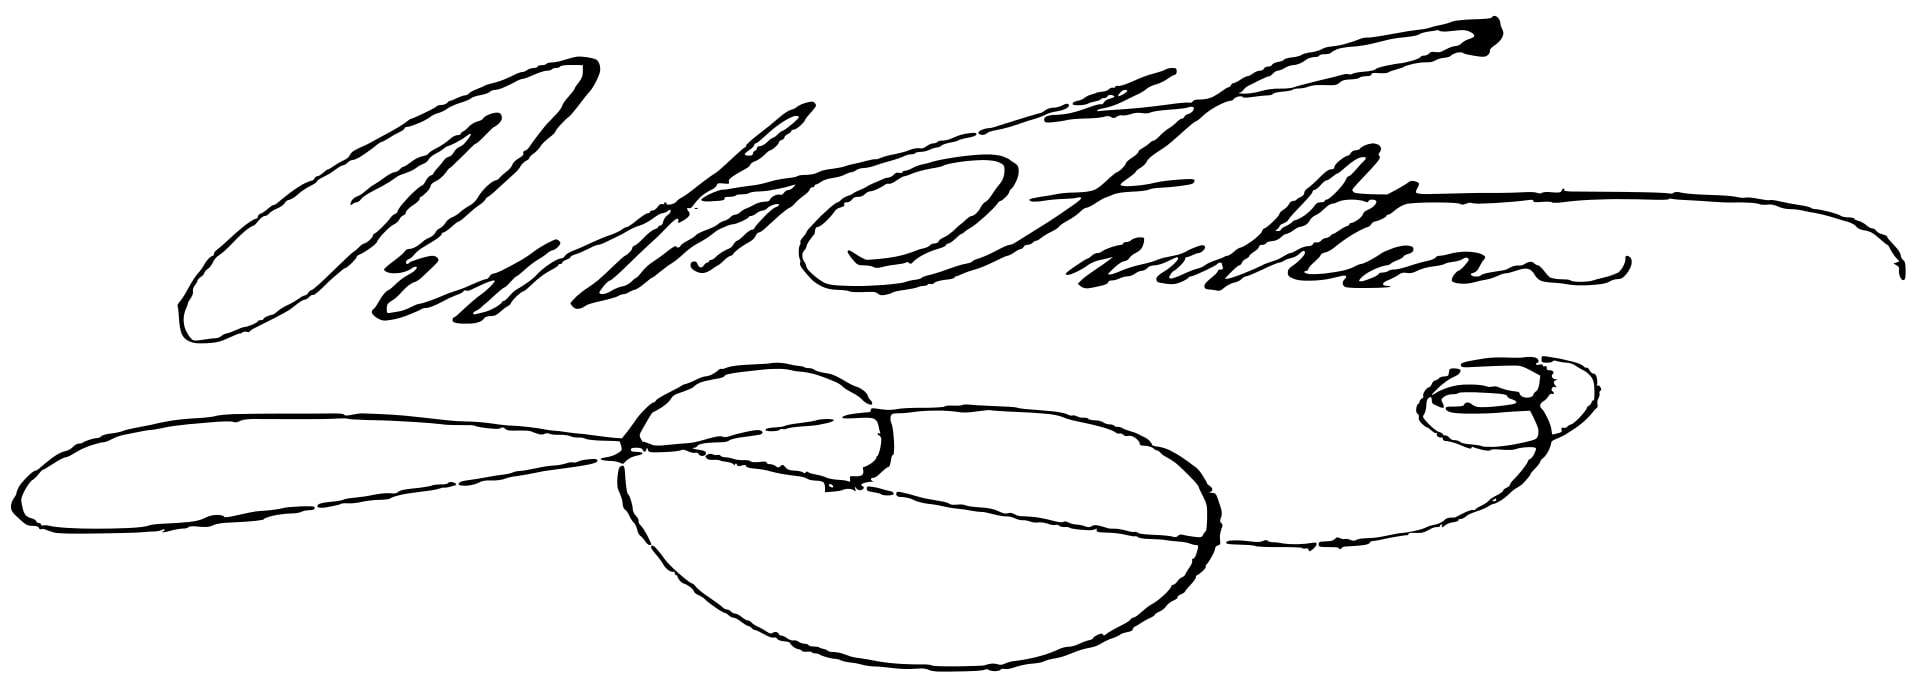 Robert Fulton Signature